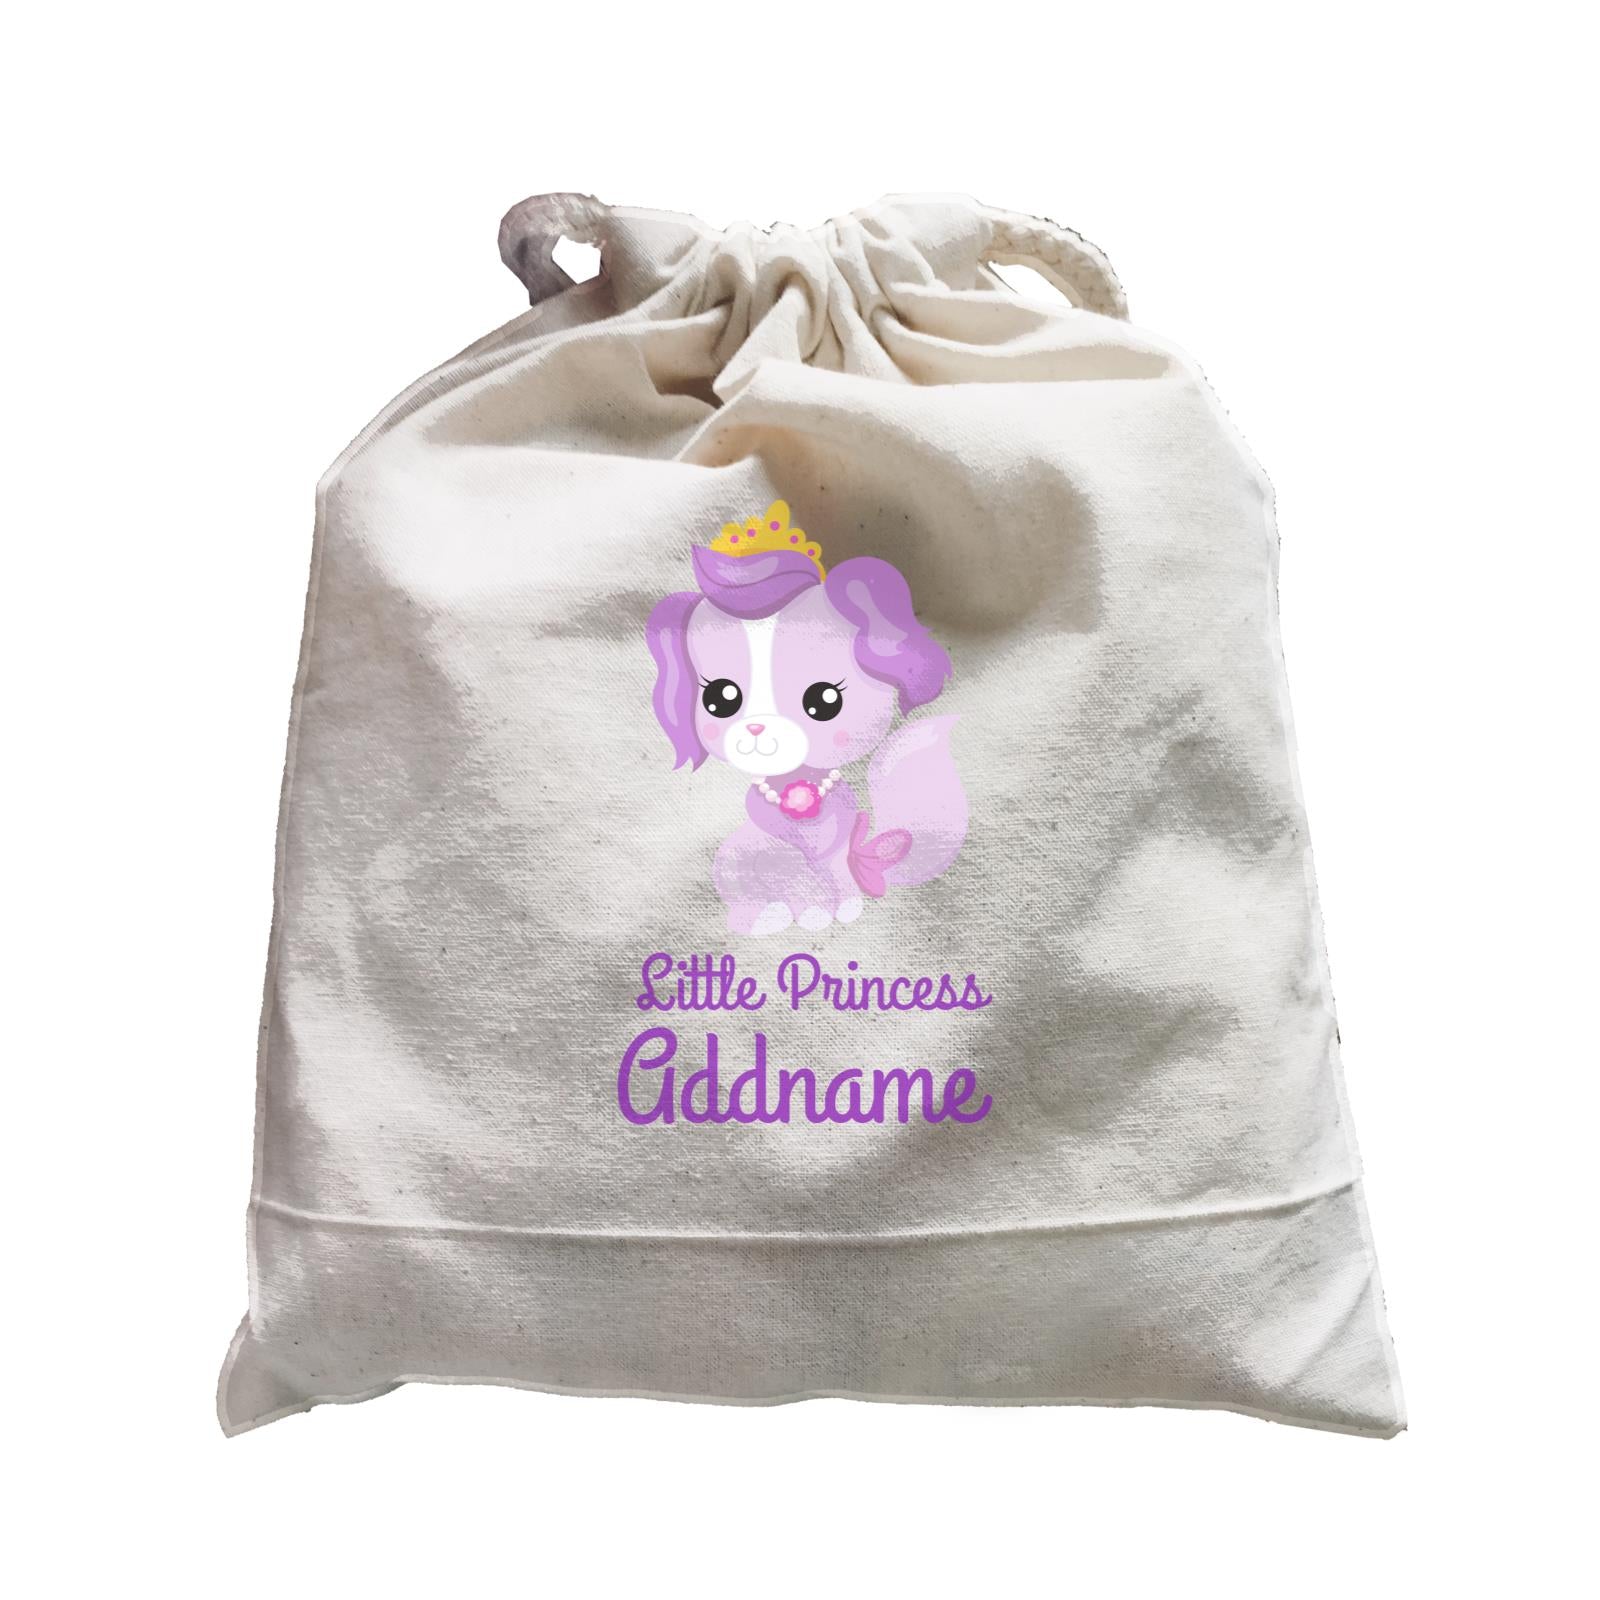 Little Princess Pets Purple Dog with Crown Addname Satchel